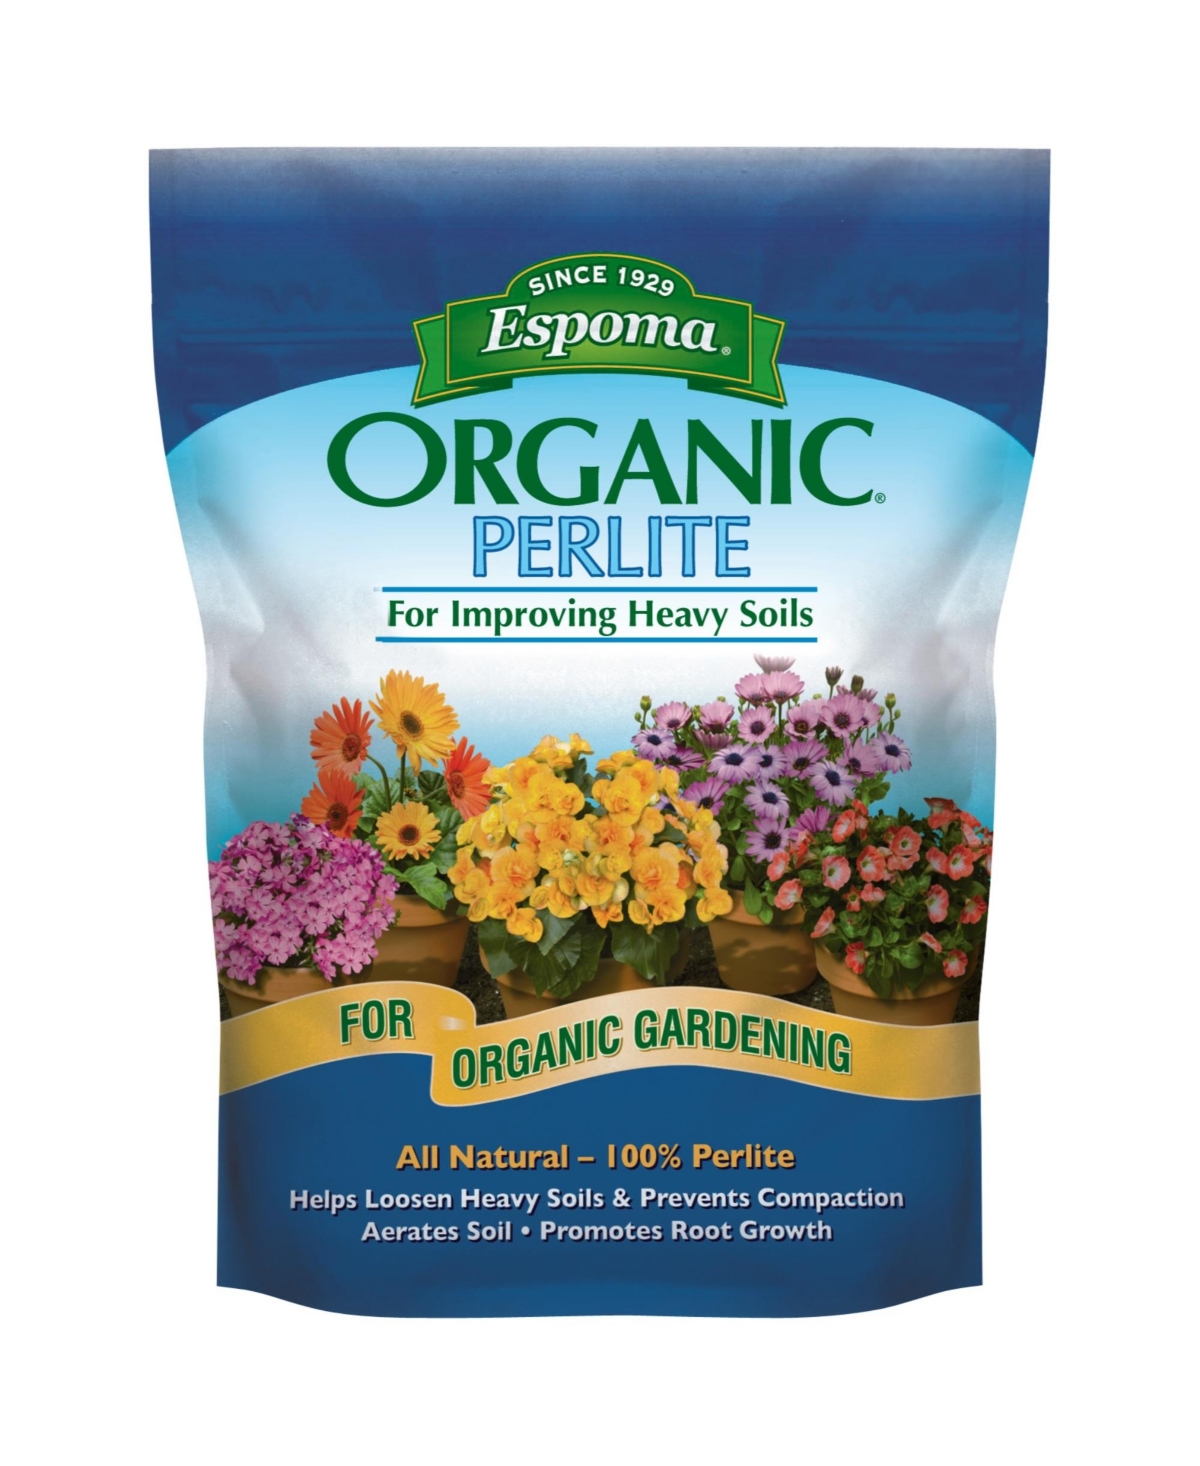 PR8 Organic Perlite For Healthy Plant Soil, 8 Quart Pack of 1 - Open Miscellaneous